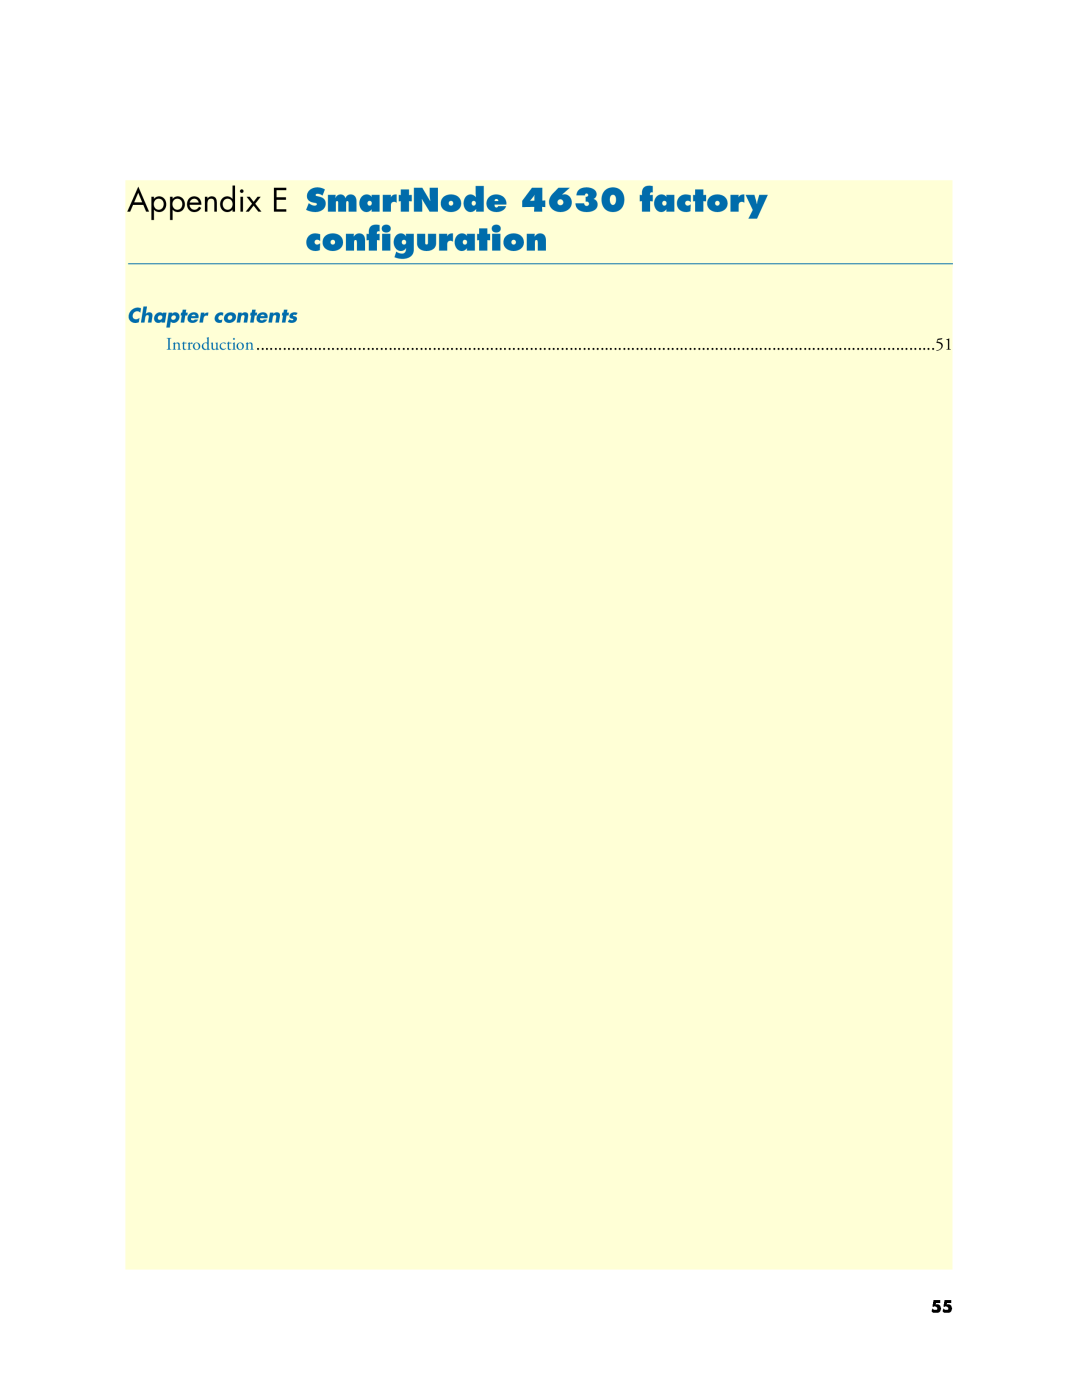 Patton electronic 4630 Series manual Appendix E SmartNode 4630 factory conﬁguration, Chapter contents 